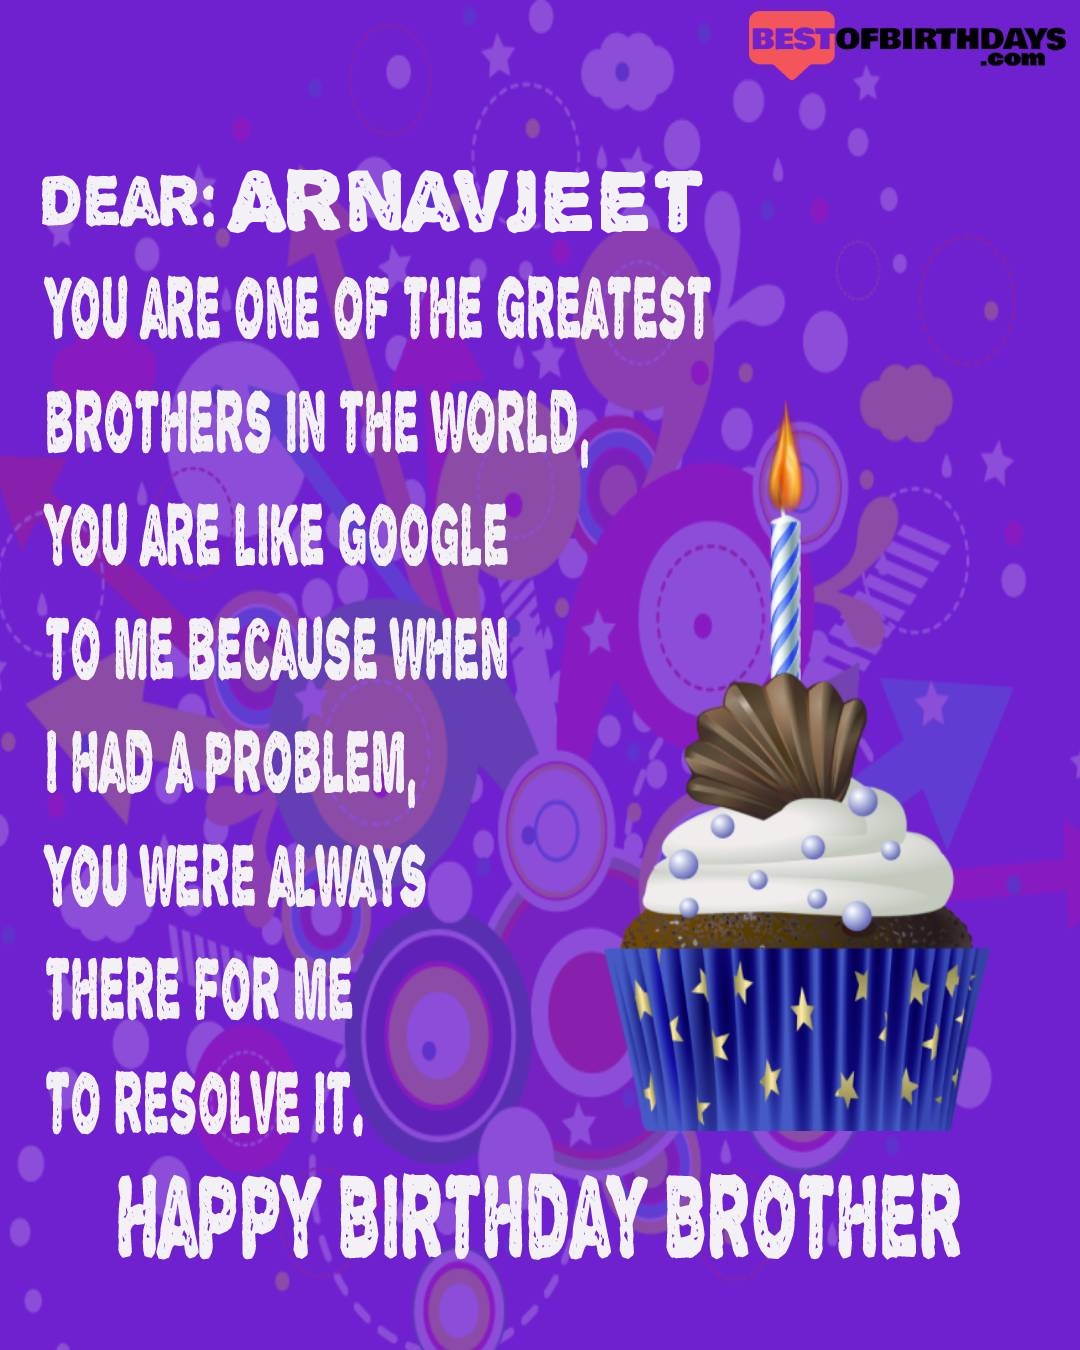 Happy birthday arnavjeet bhai brother bro